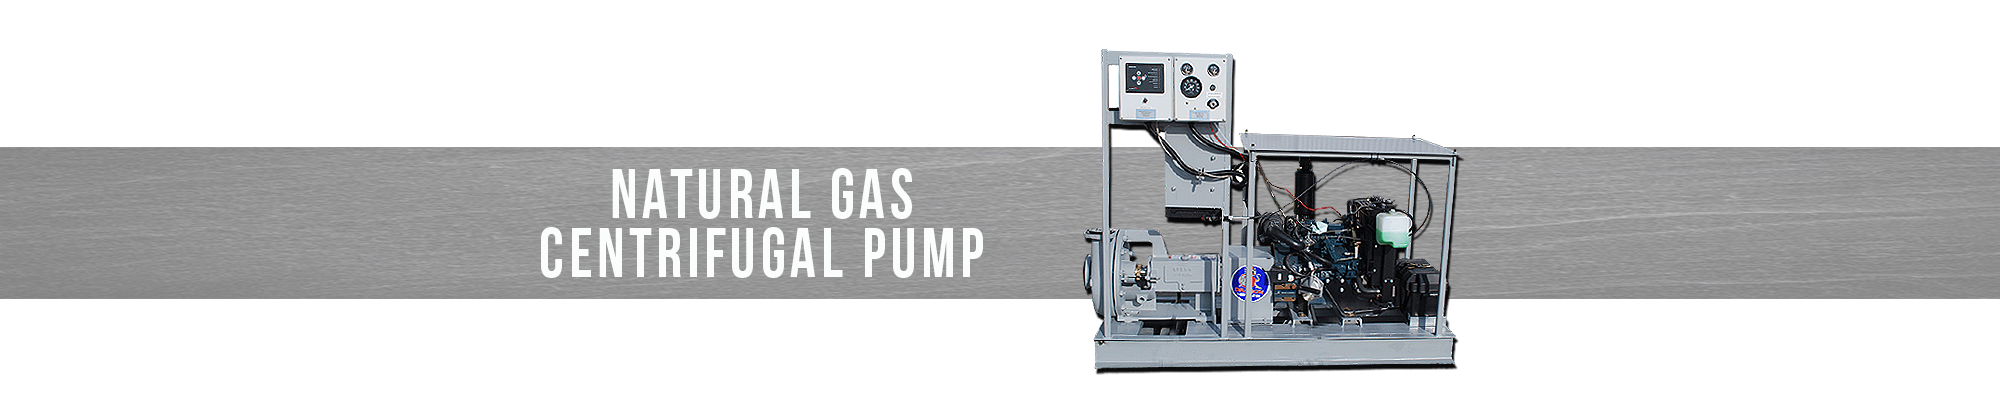 Natural Gas Centrifugal Pump